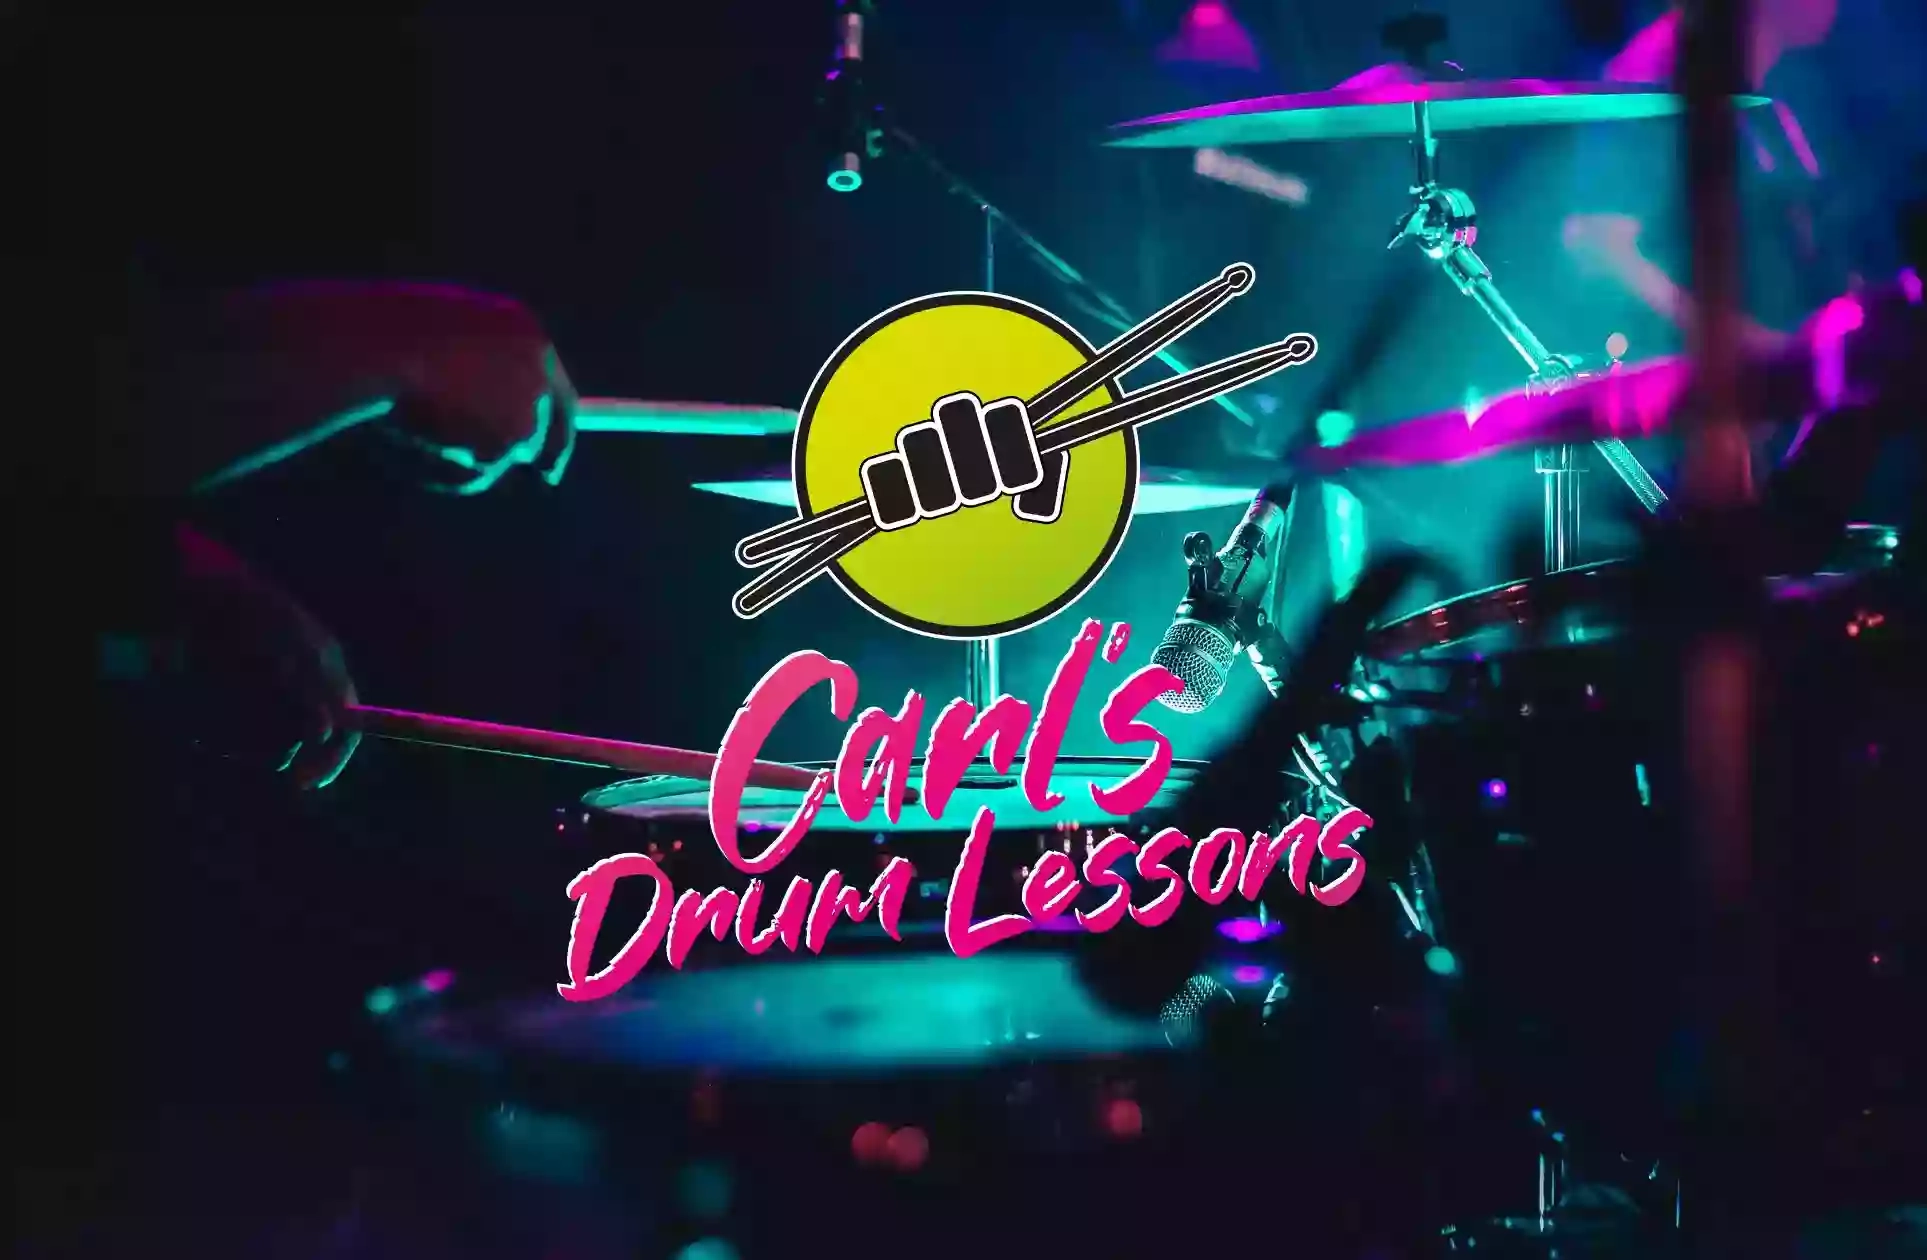 Carl's Drum Lessons